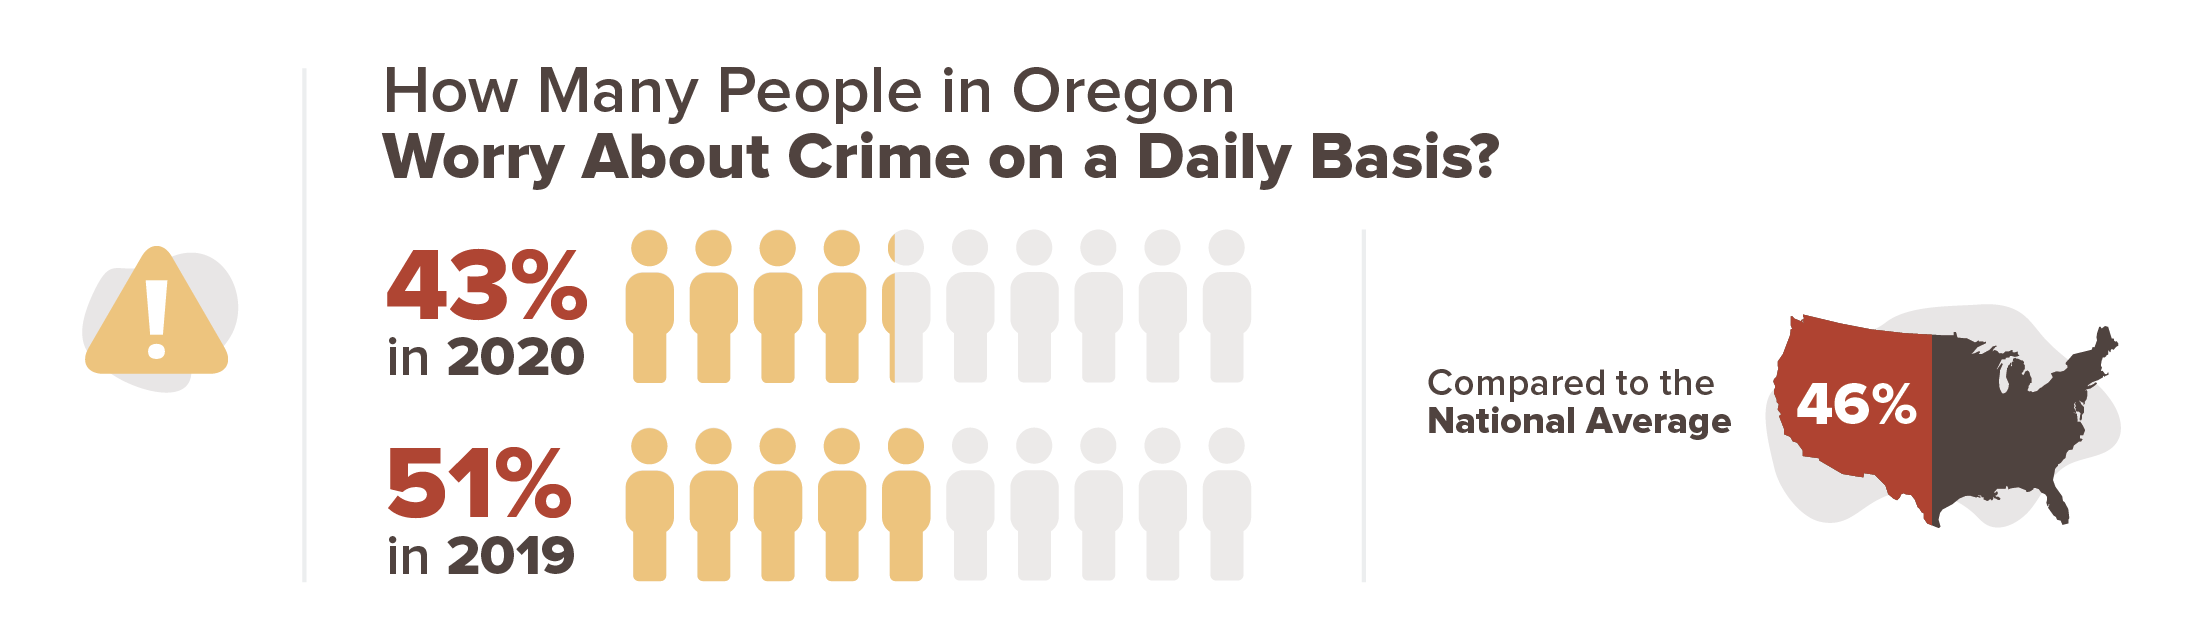 Oregon crime stats infographic